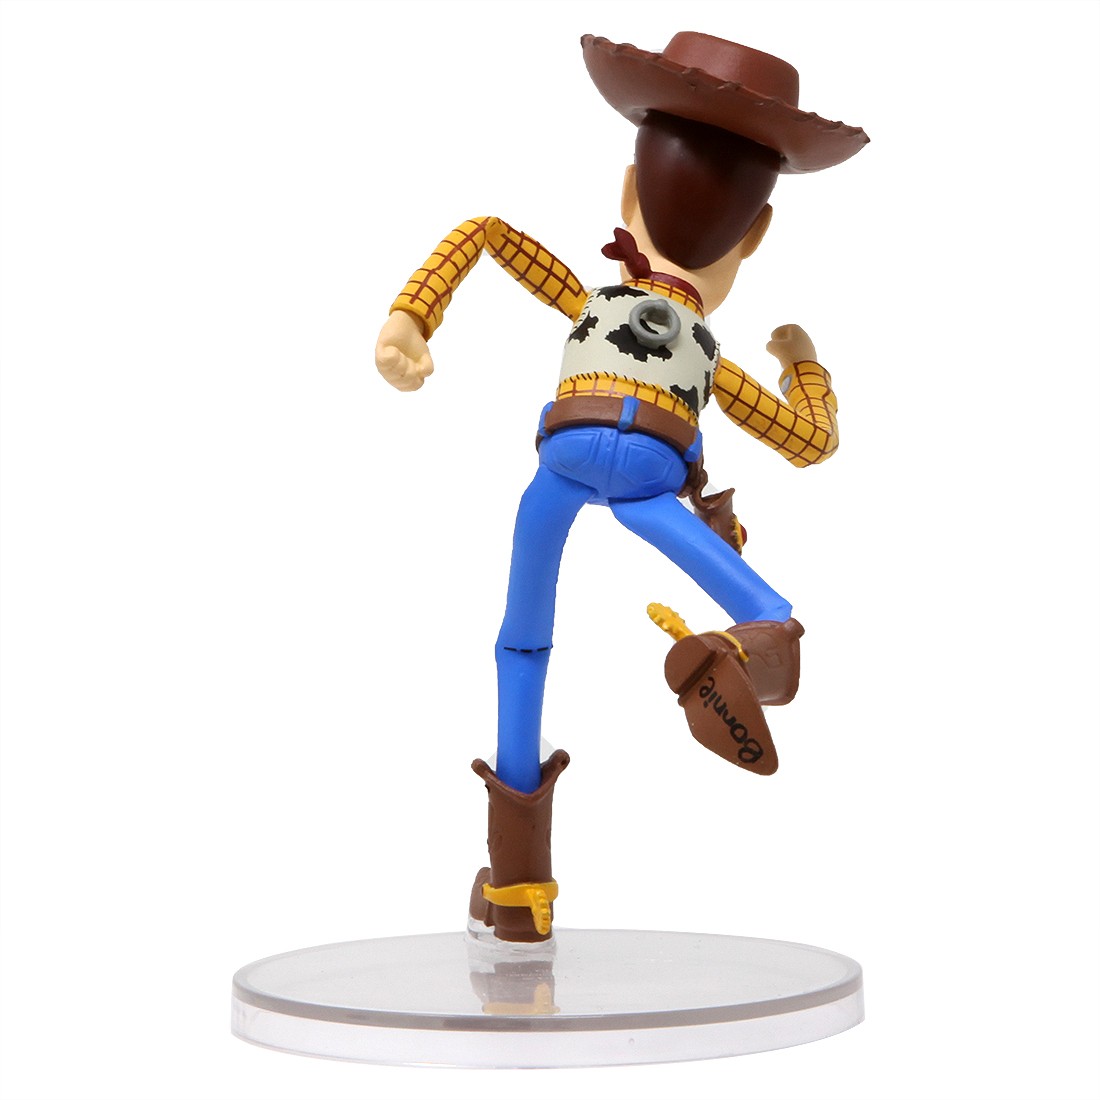 Medicom UDF Toy Story 4 Woody Ultra Detail Figure brown